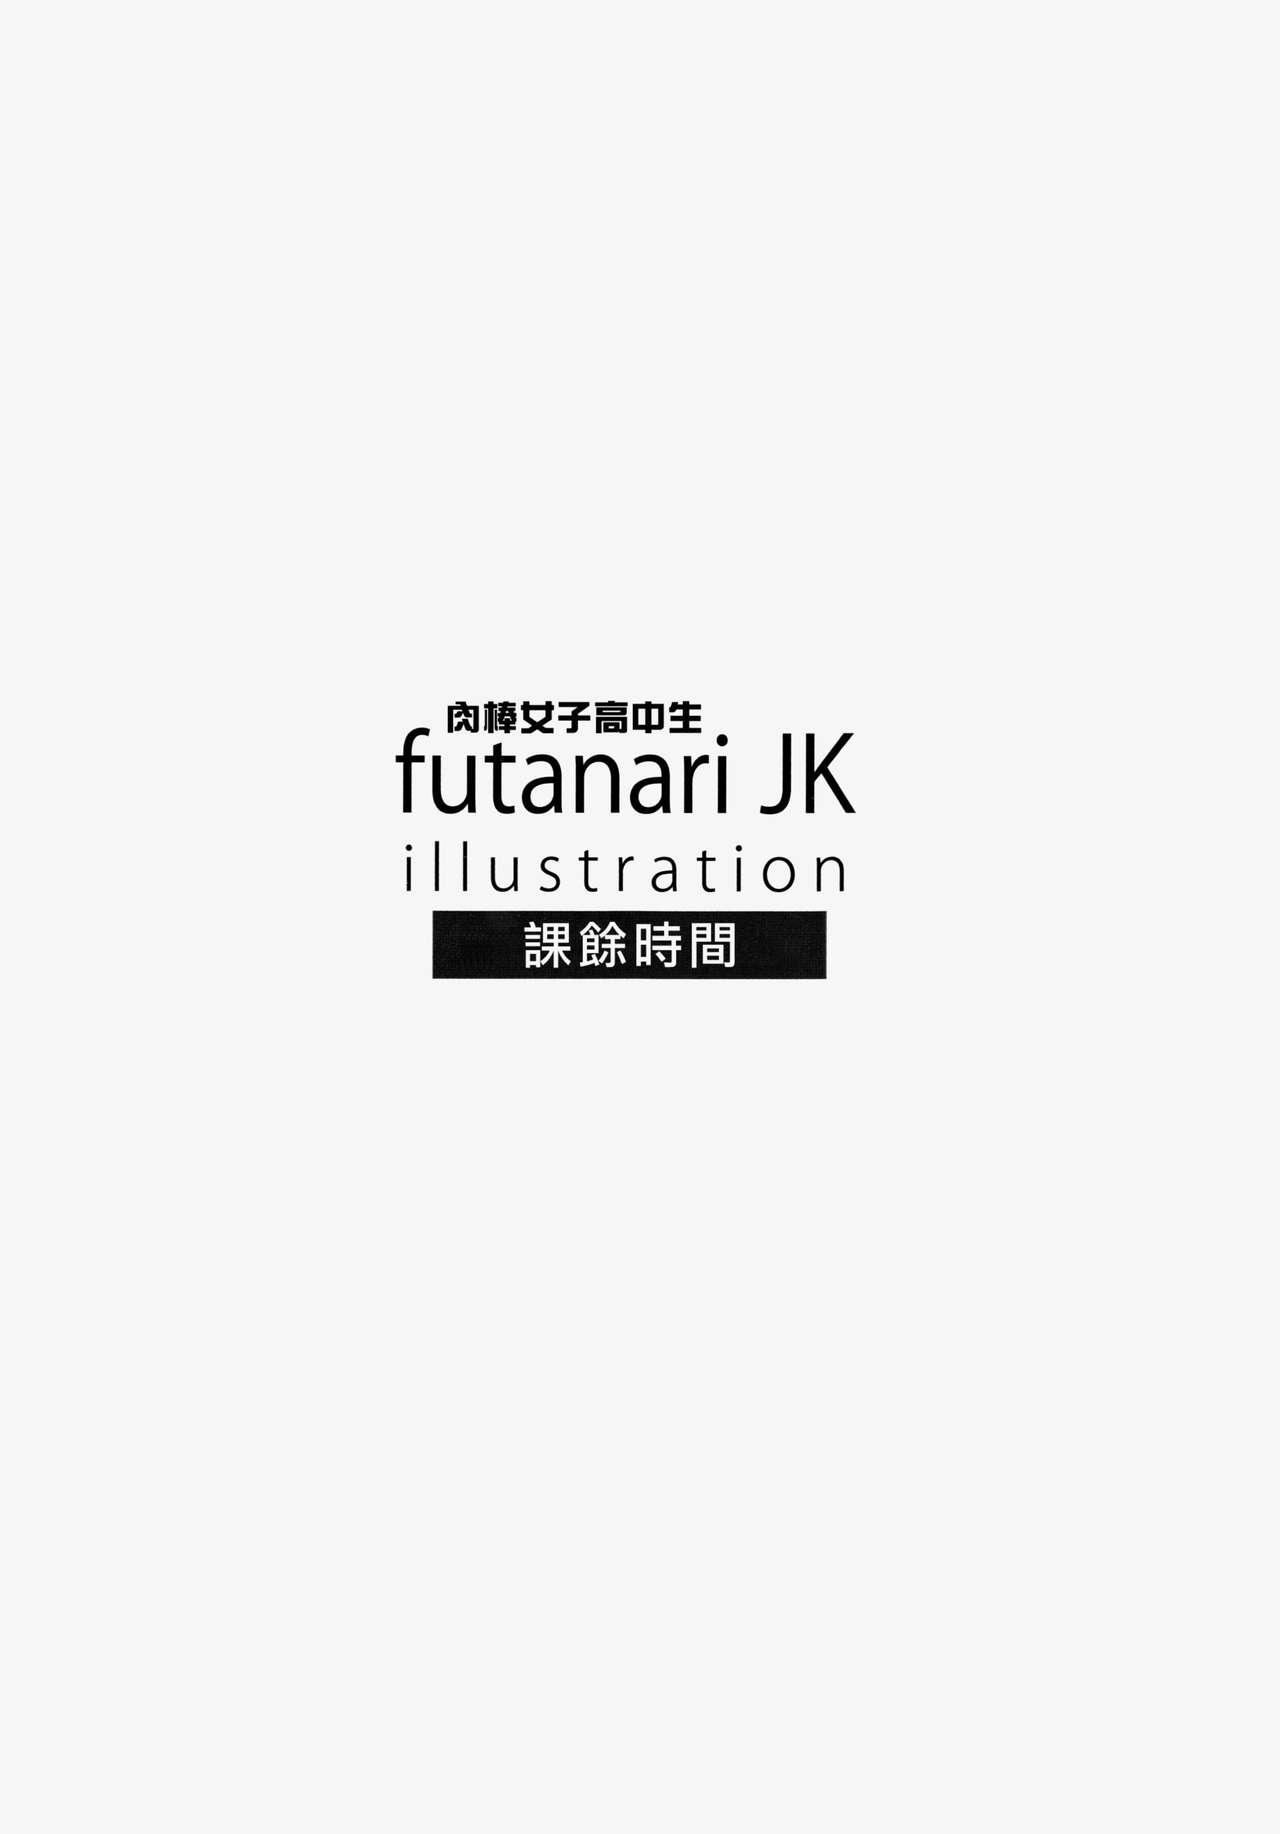 FutanariJK illustration after school 18